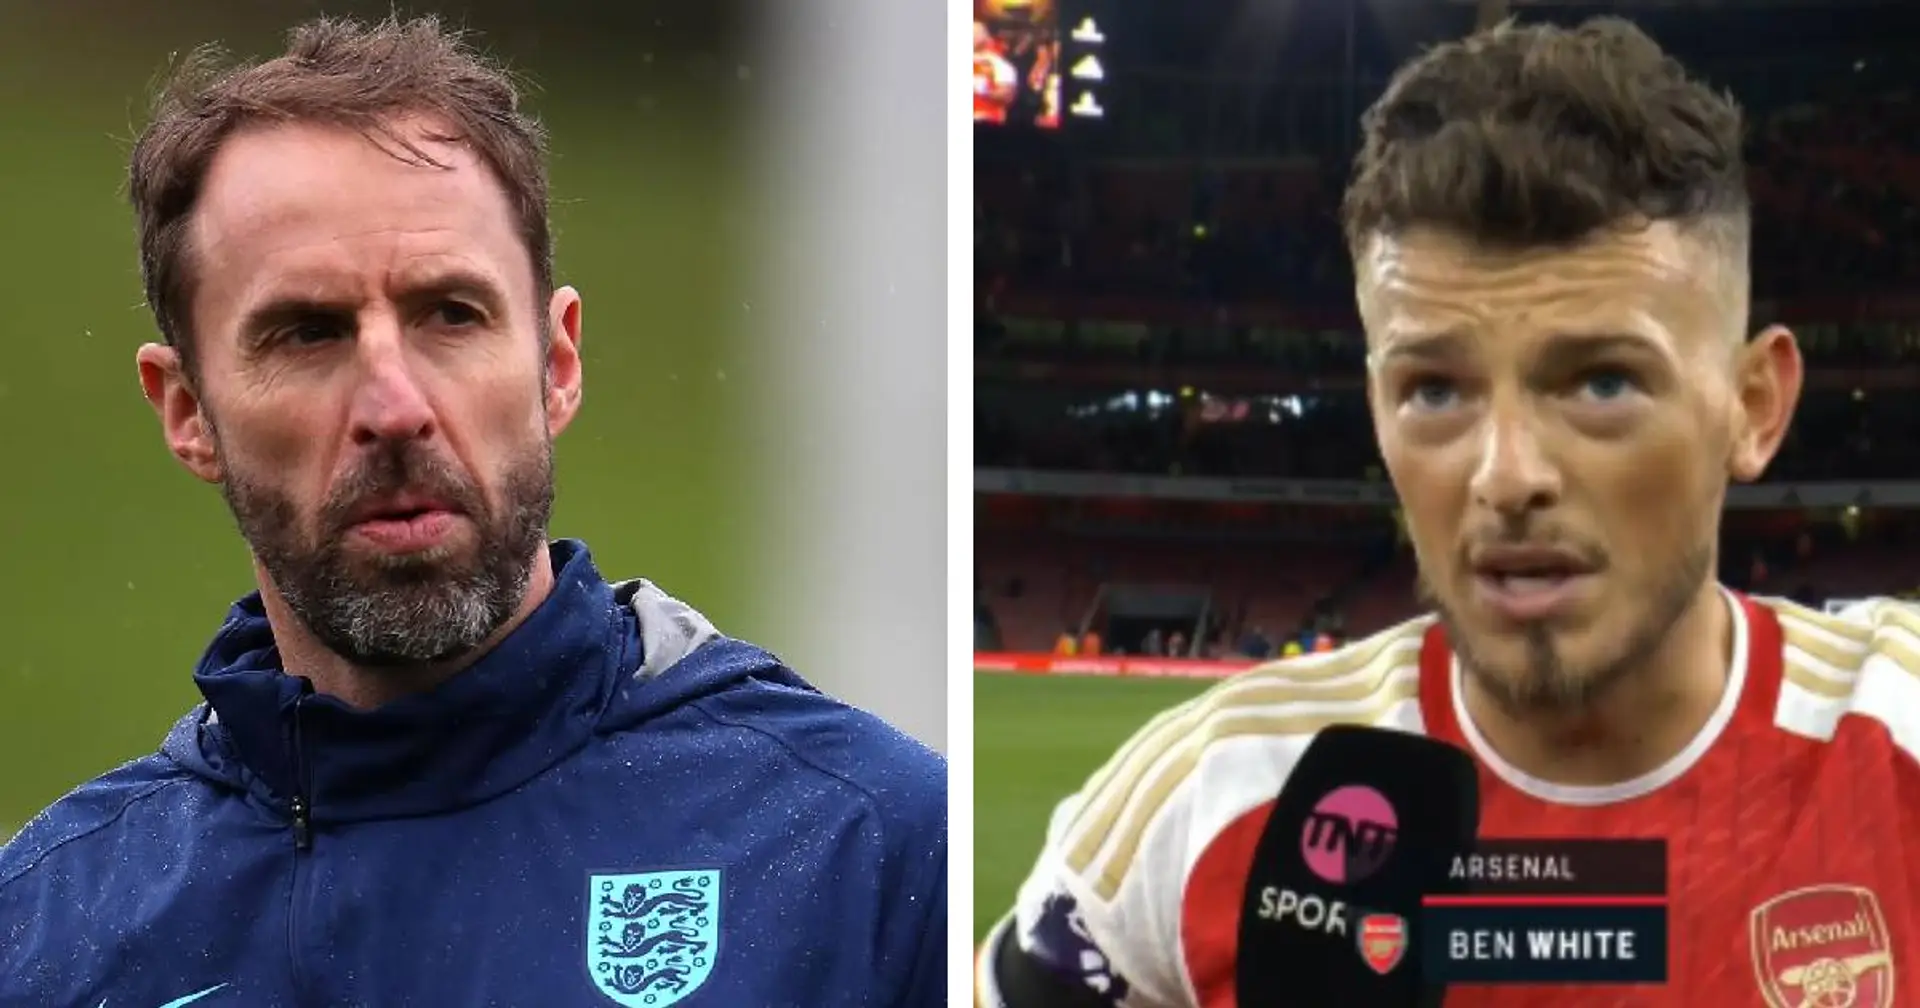 'Grow a pair & apologise to the British national': Arsenal fans demand Southgate apology to Ben White